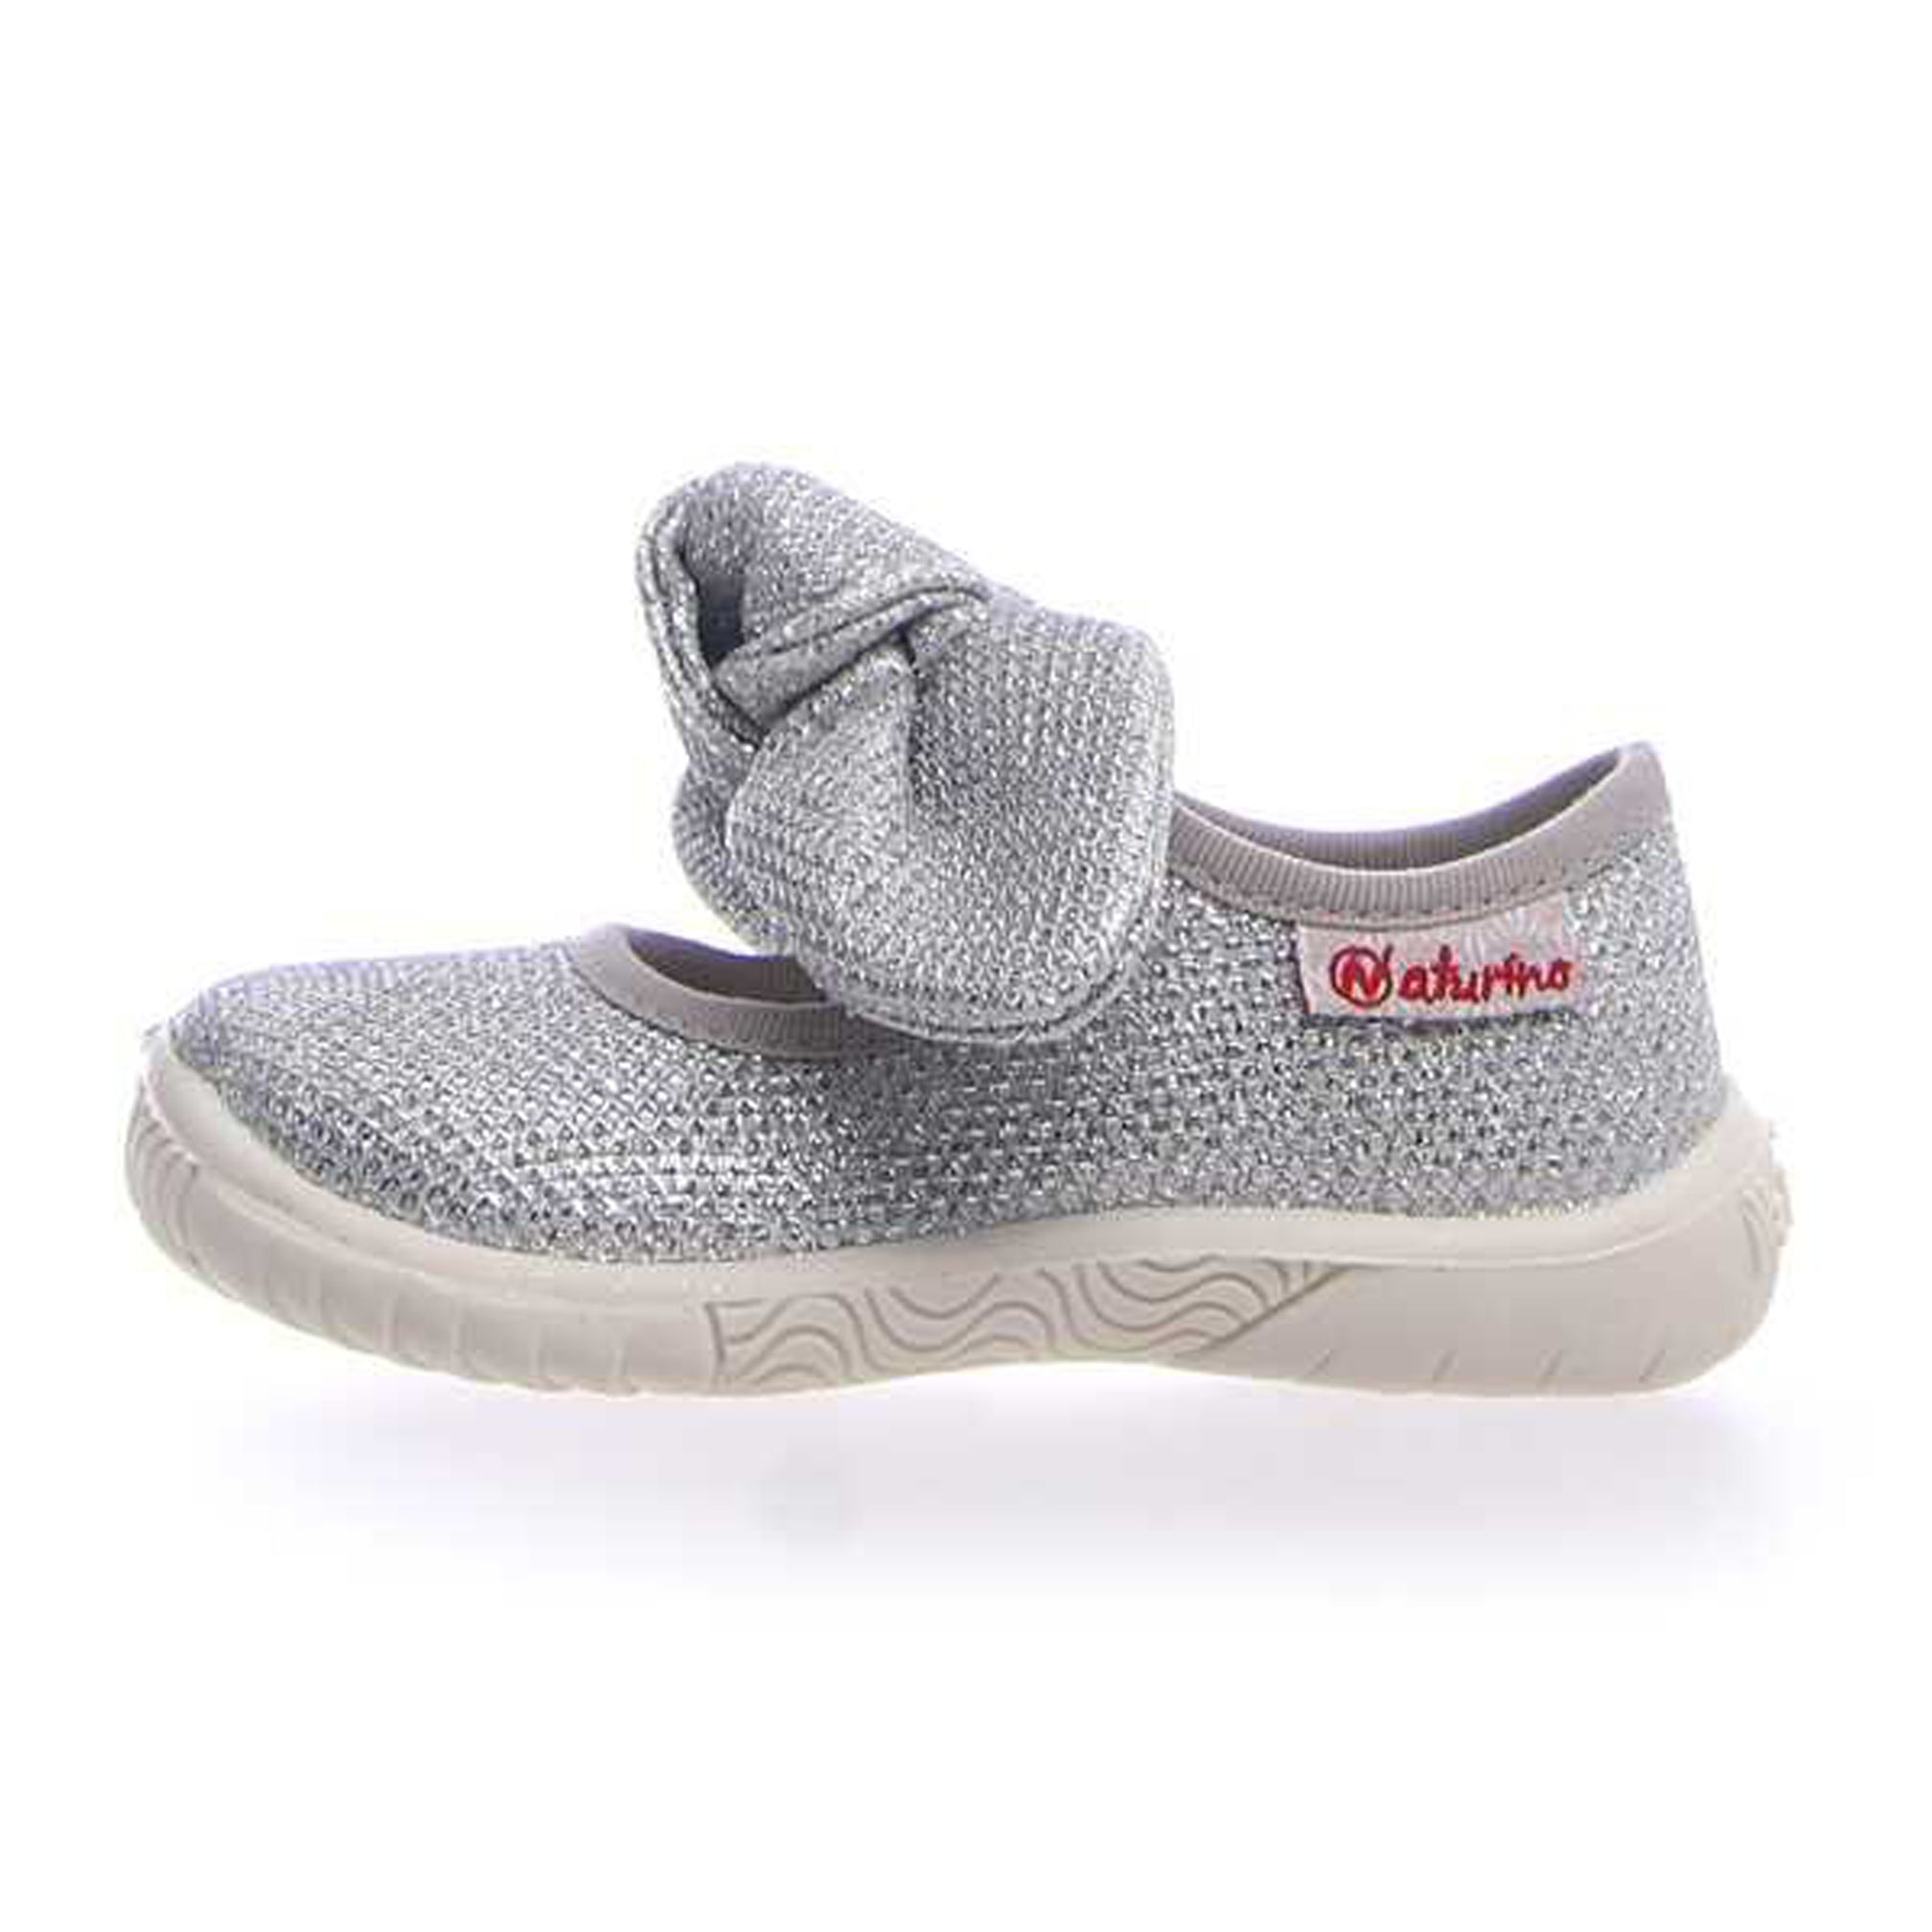 Naturino New Alagna Silver Shoes